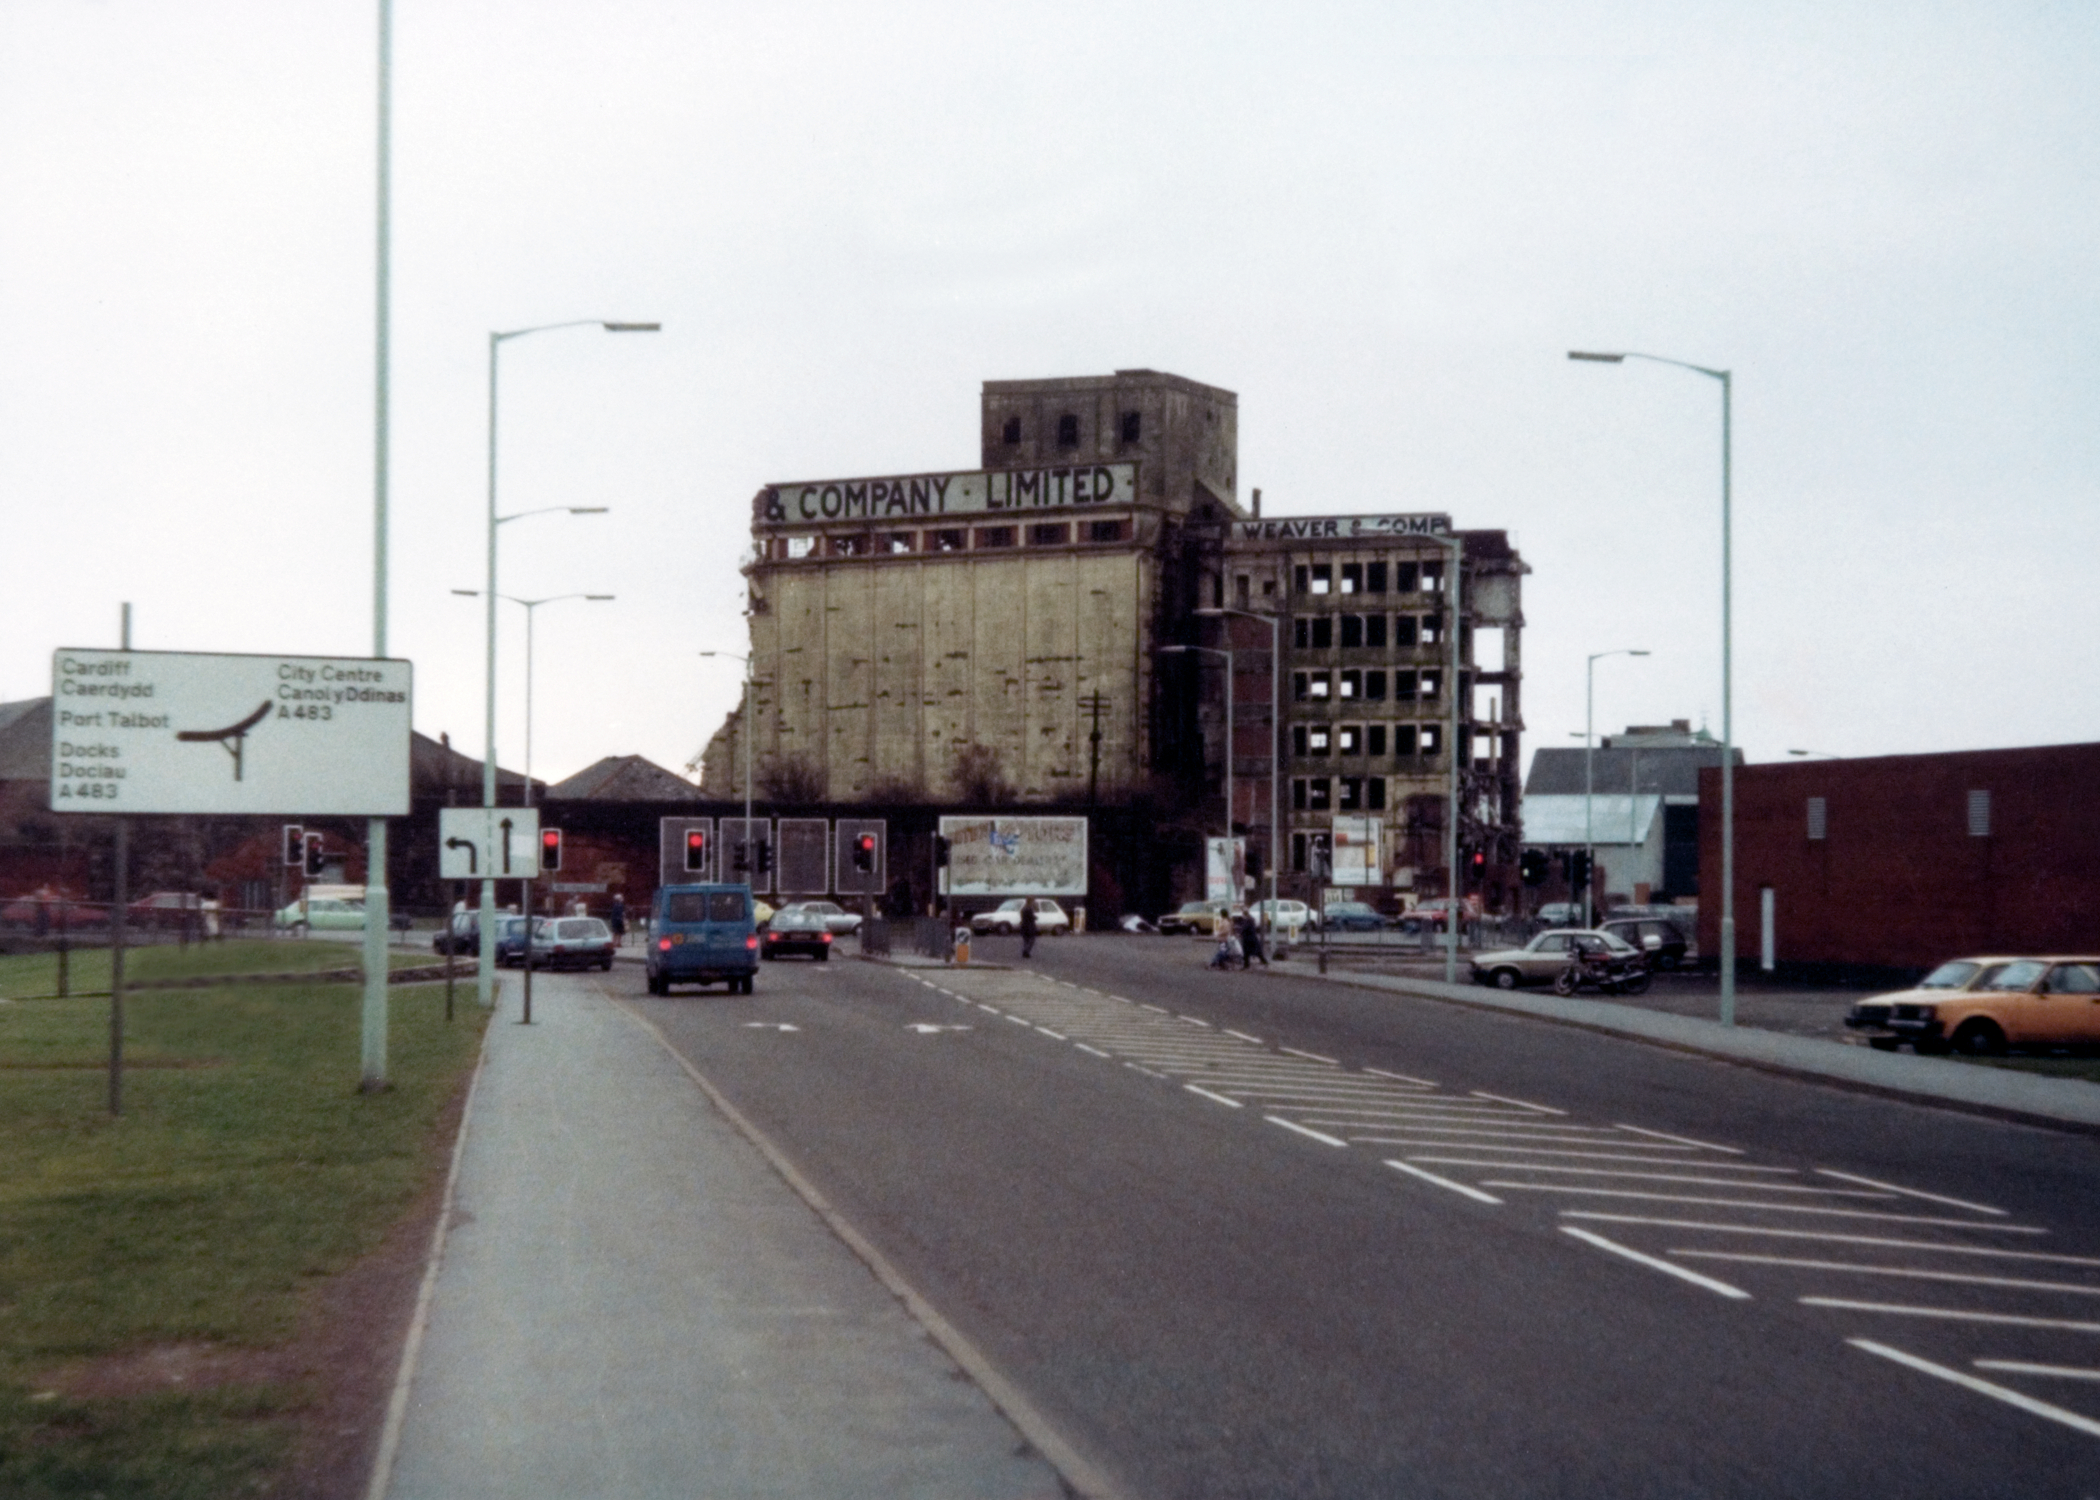 Weaver's flour mills, Swansea, photograph